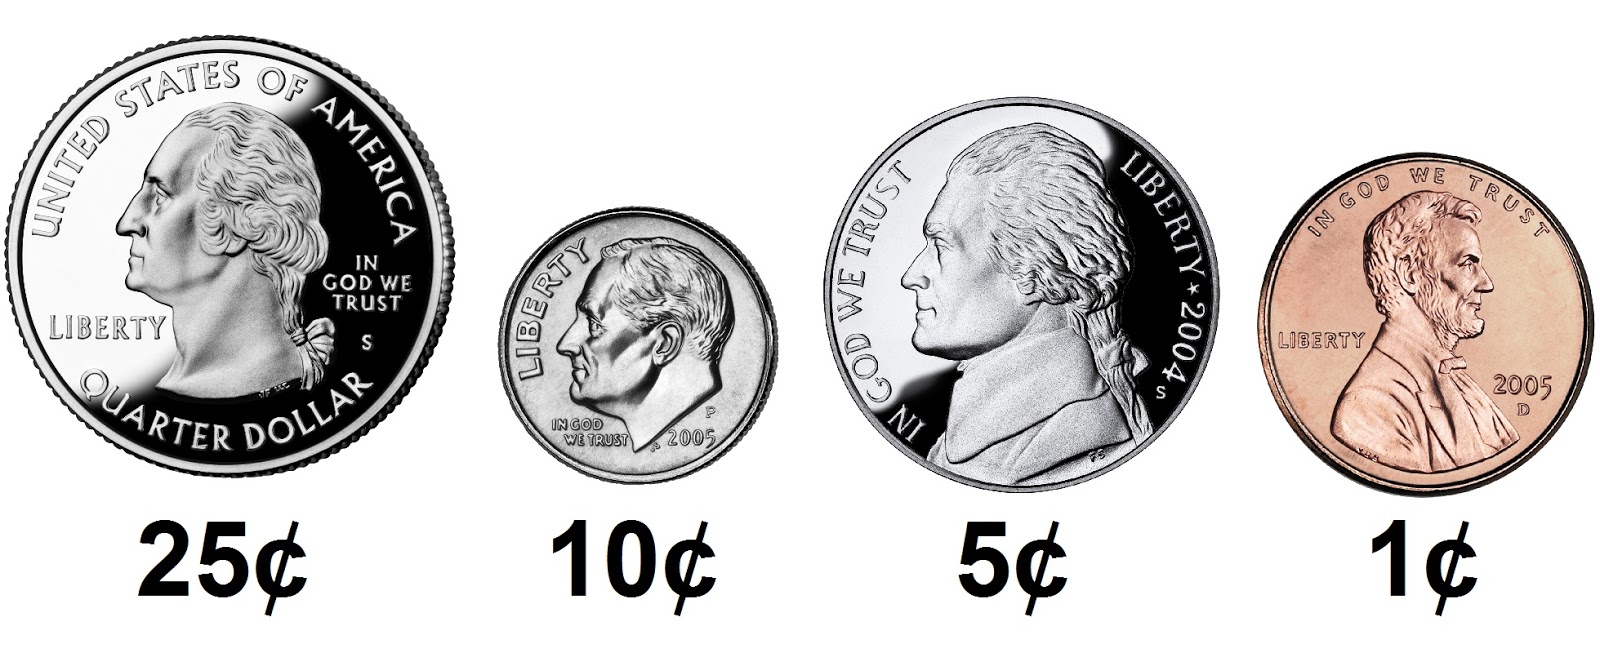 usd coins 2016